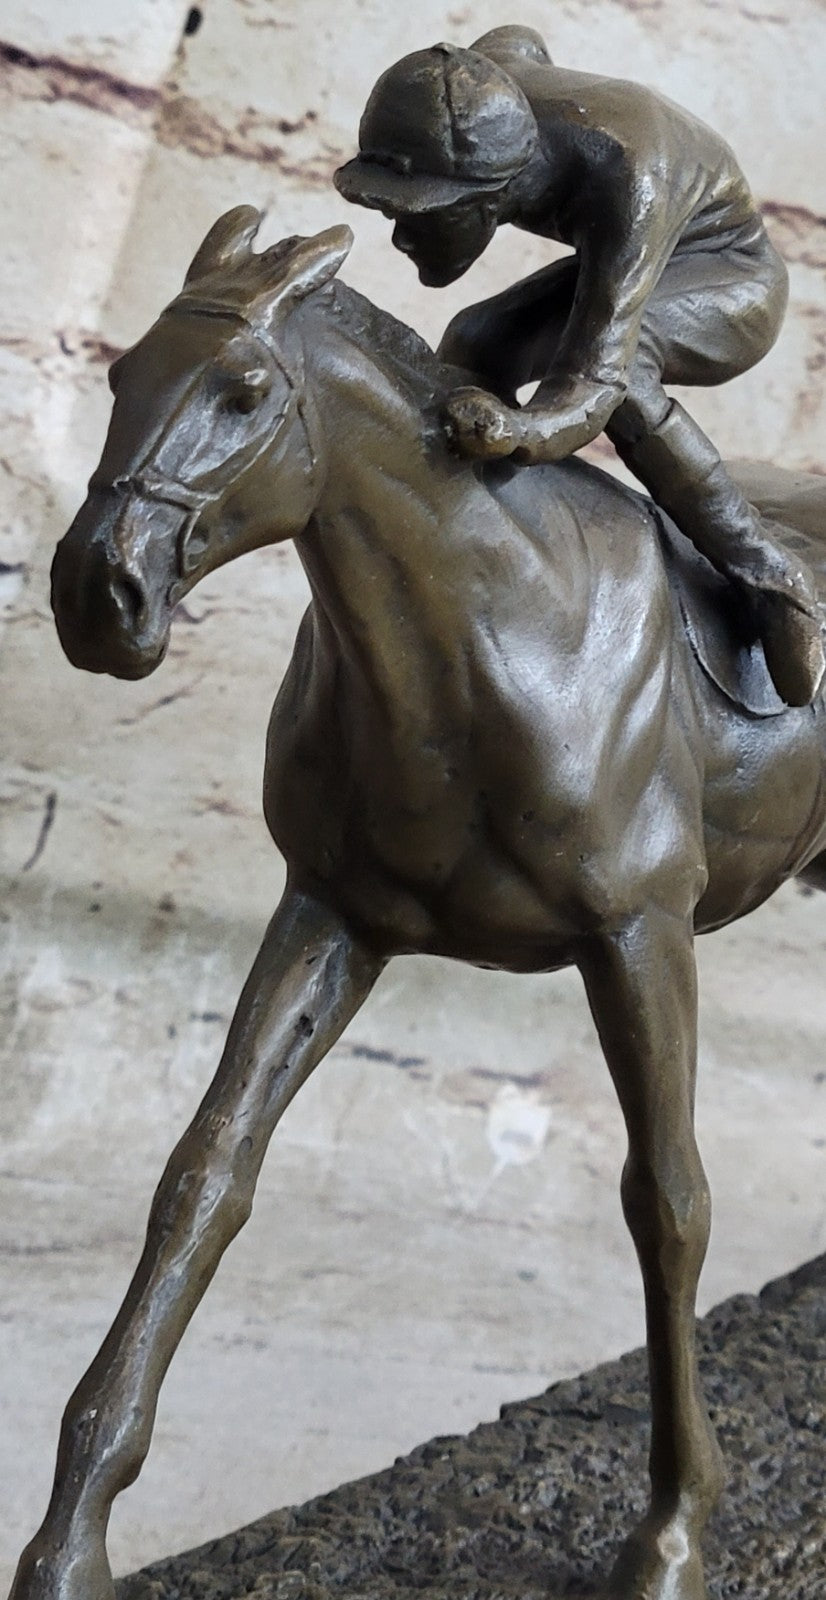 100% Bronze Sculpture Original  Signed Statue Of Jockey& Race Horse Office Trophy